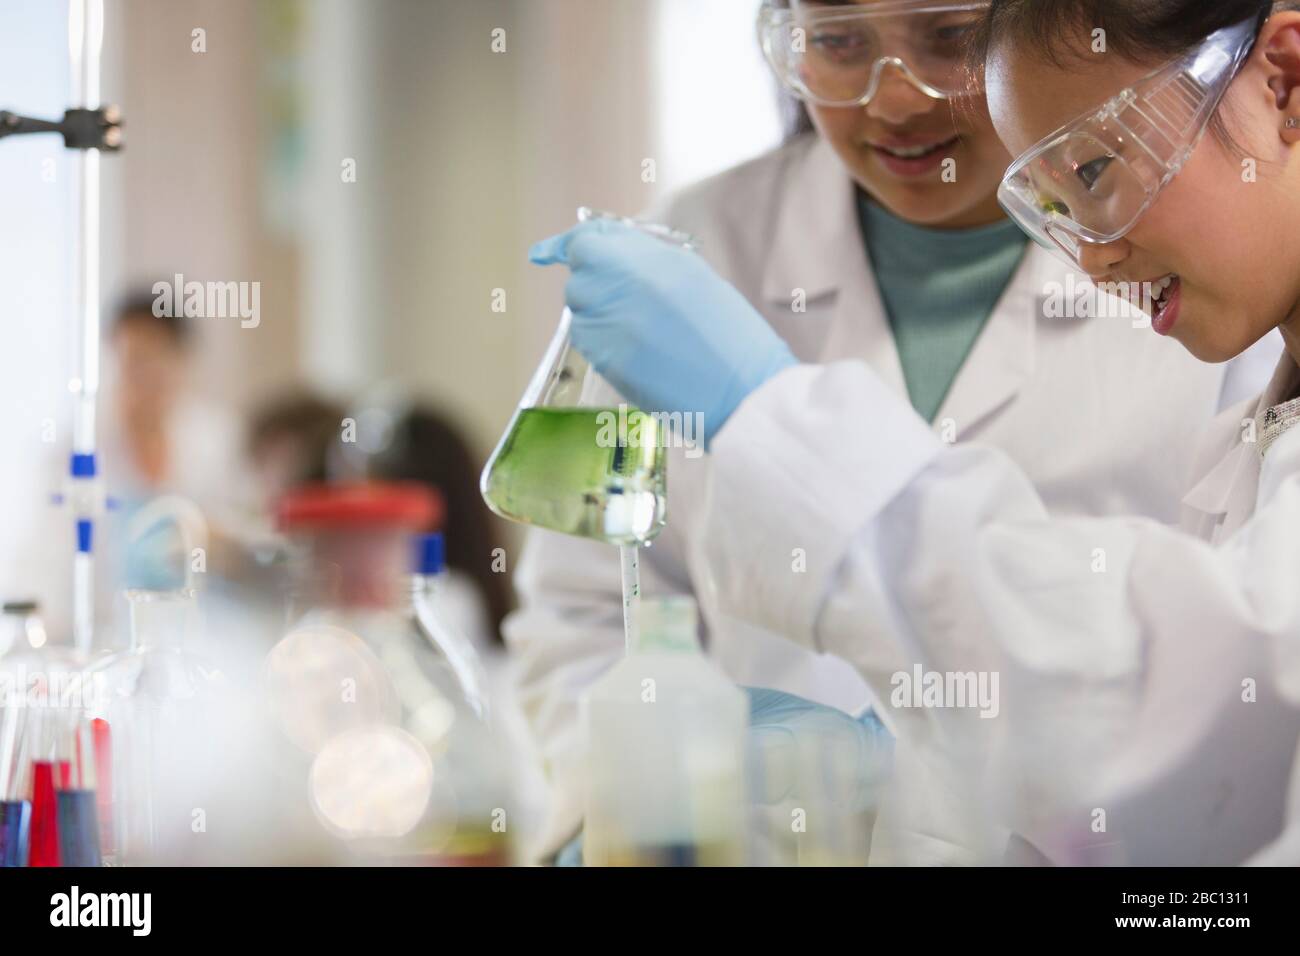 Girl students conducting scientific experiment, examining liquid in beaker in laboratory classroom Stock Photo